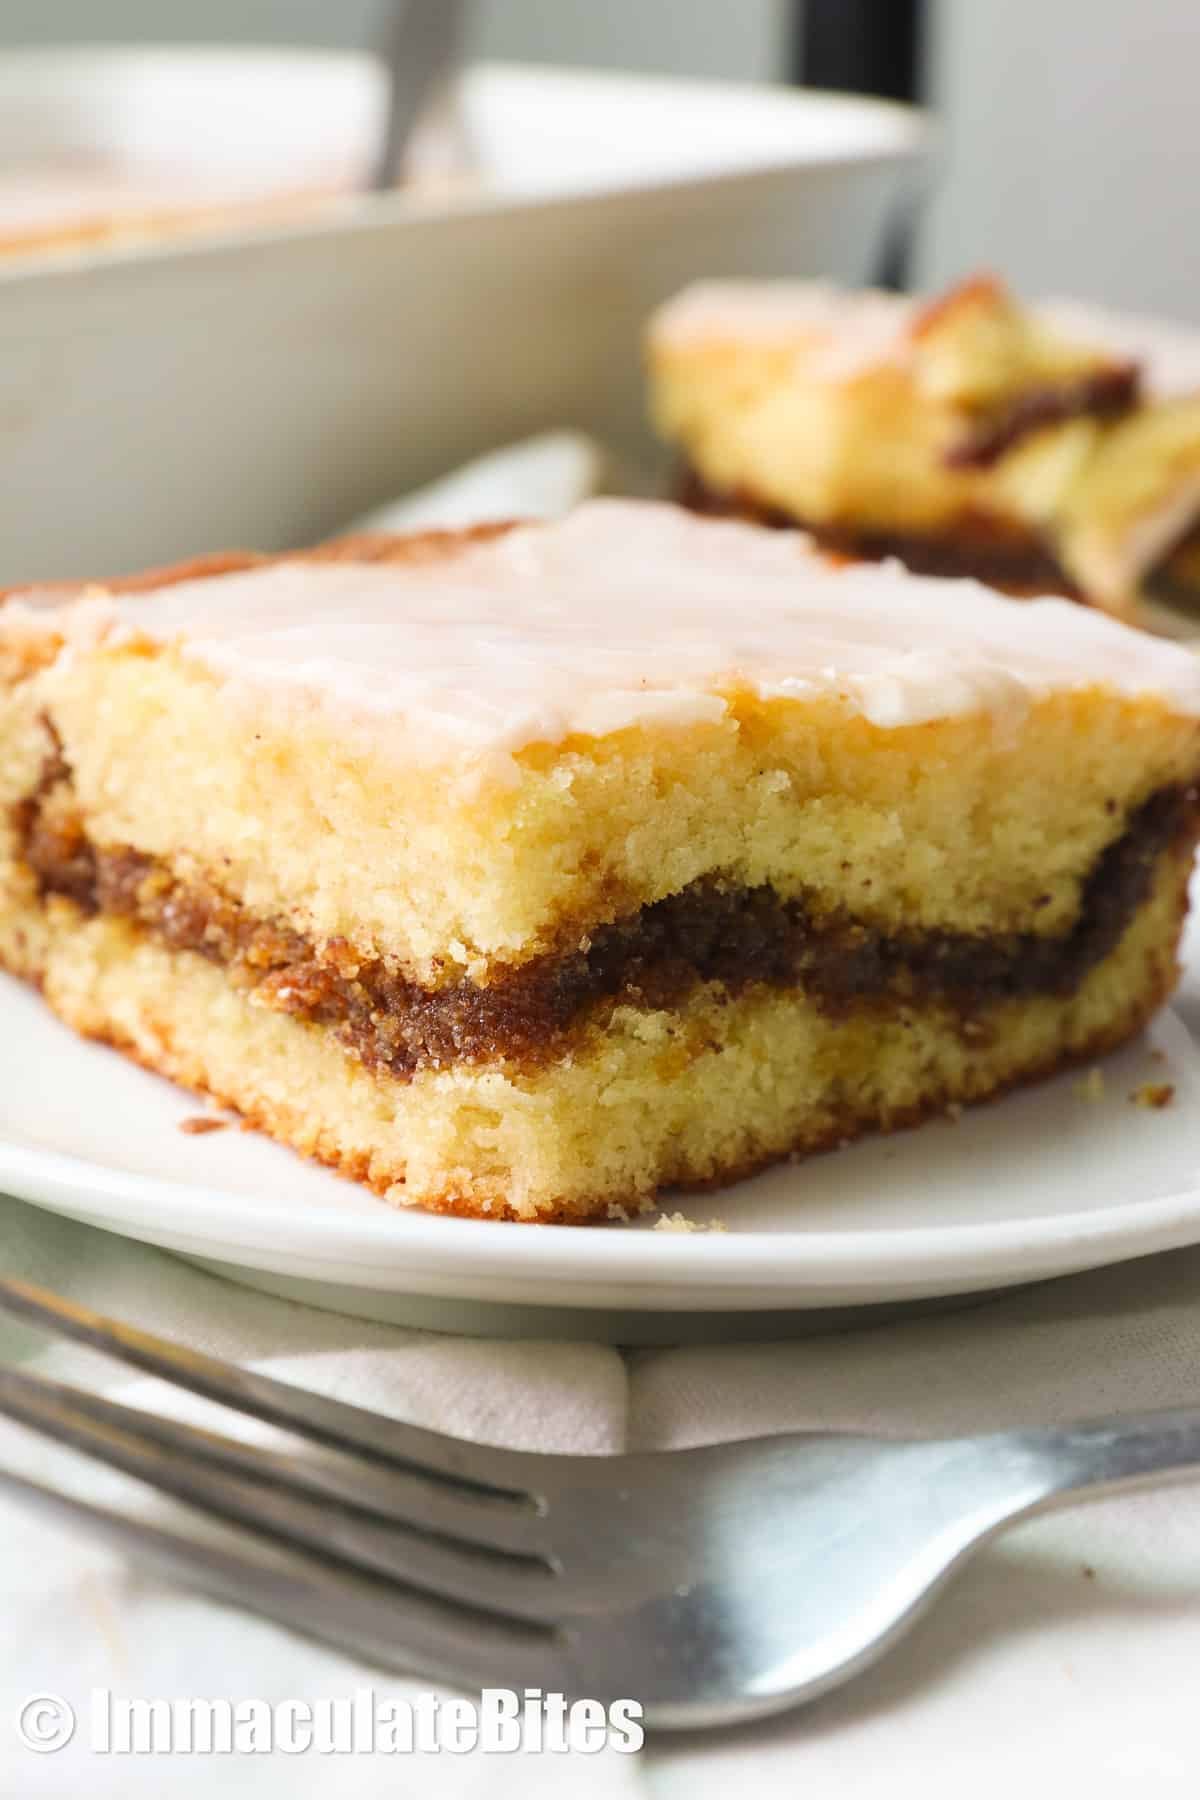 Honey Bun Cake with warm cinnamon swirls and drizzles of decadent vanilla glaze